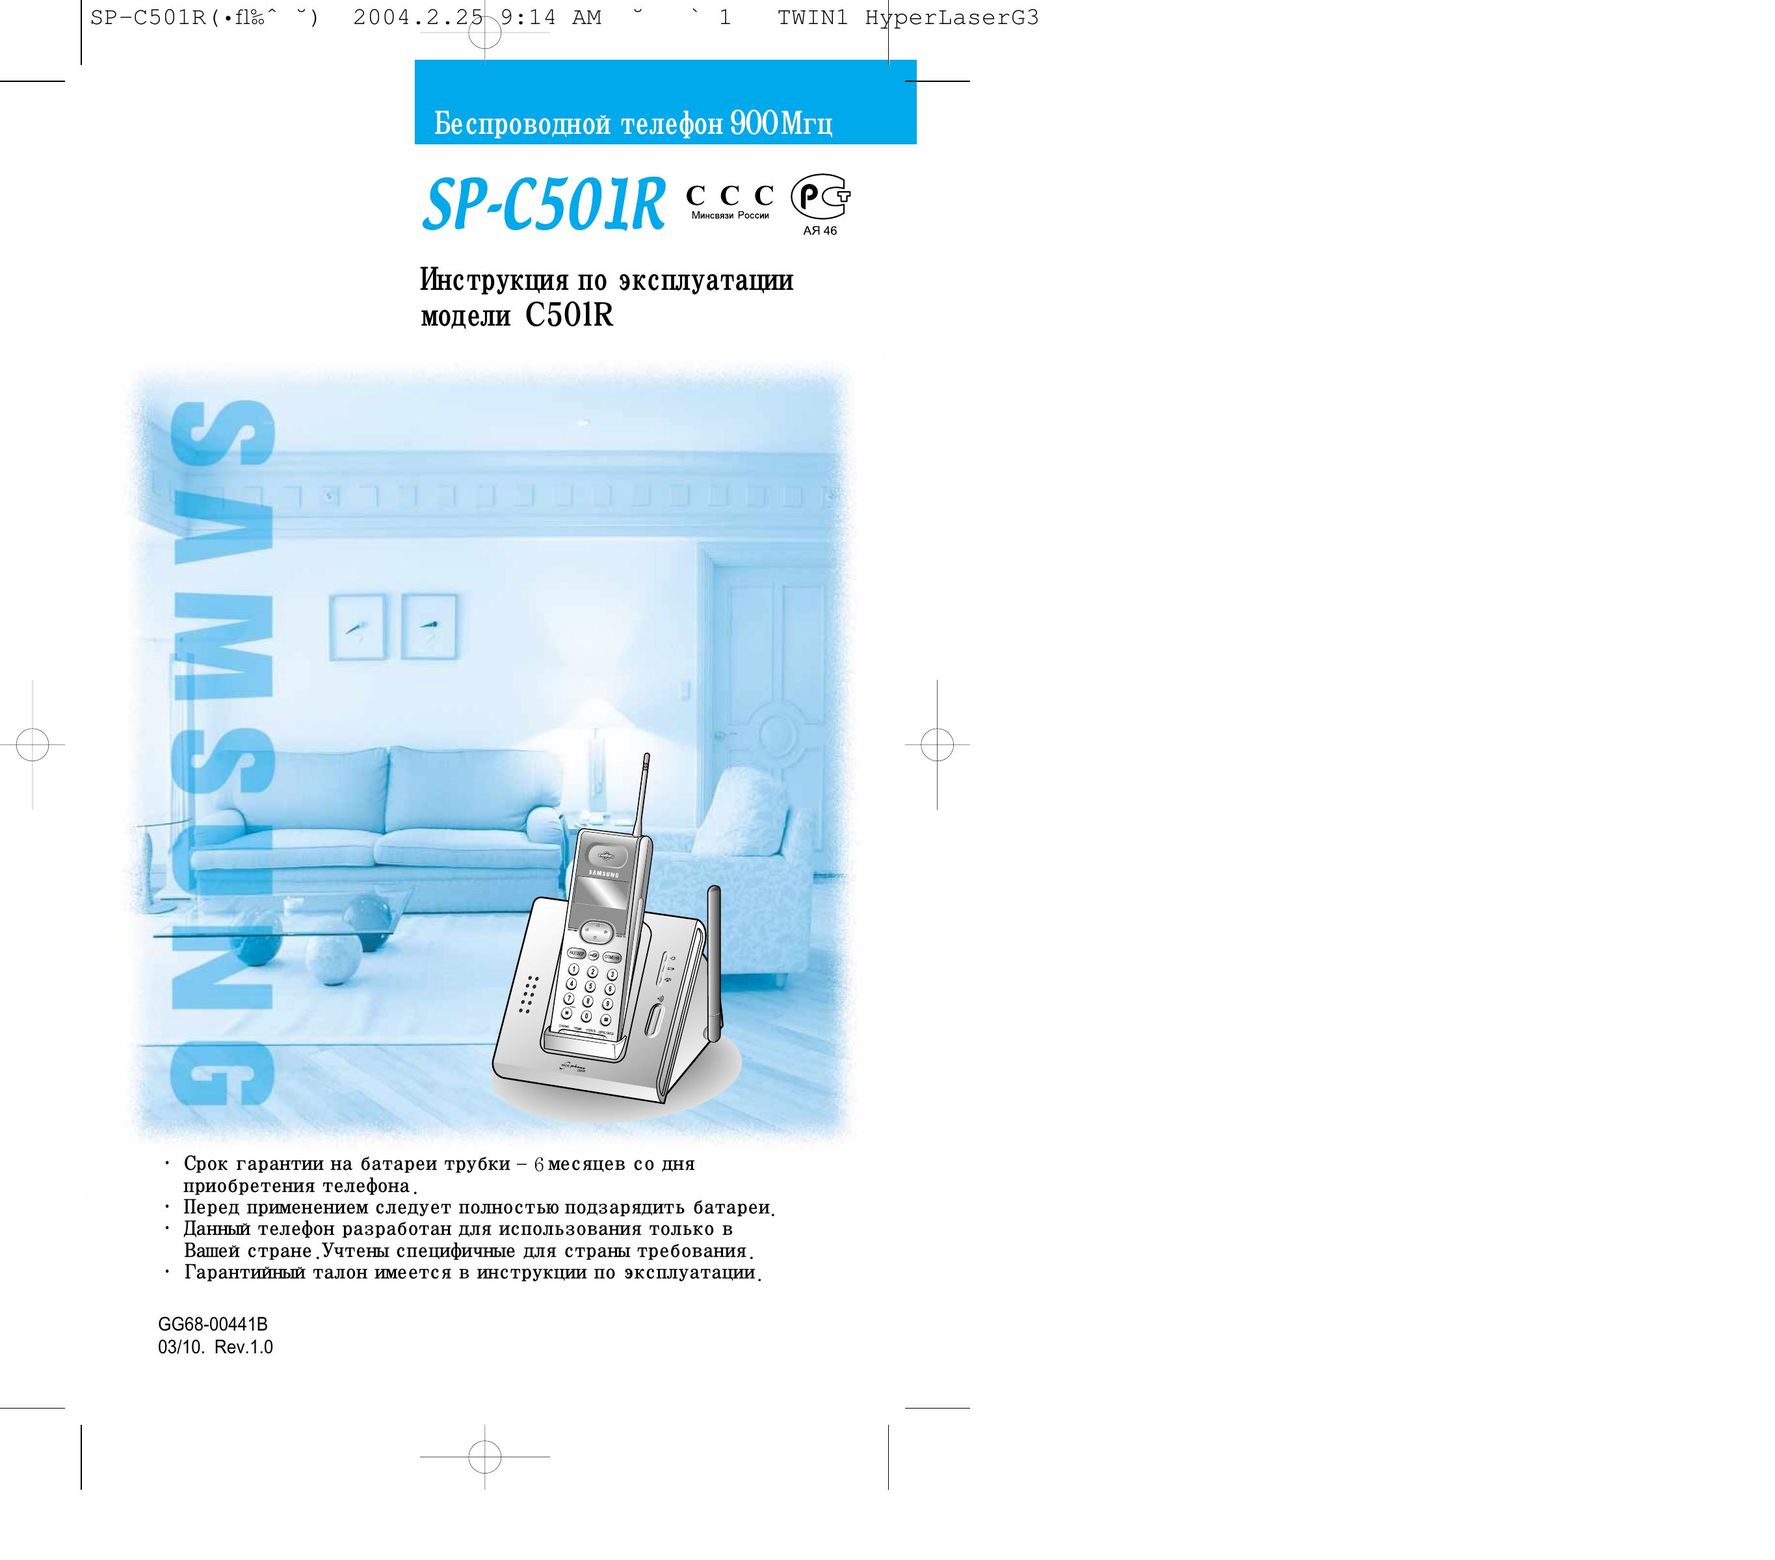 Samsung SP-C501R Cordless Telephone User Manual